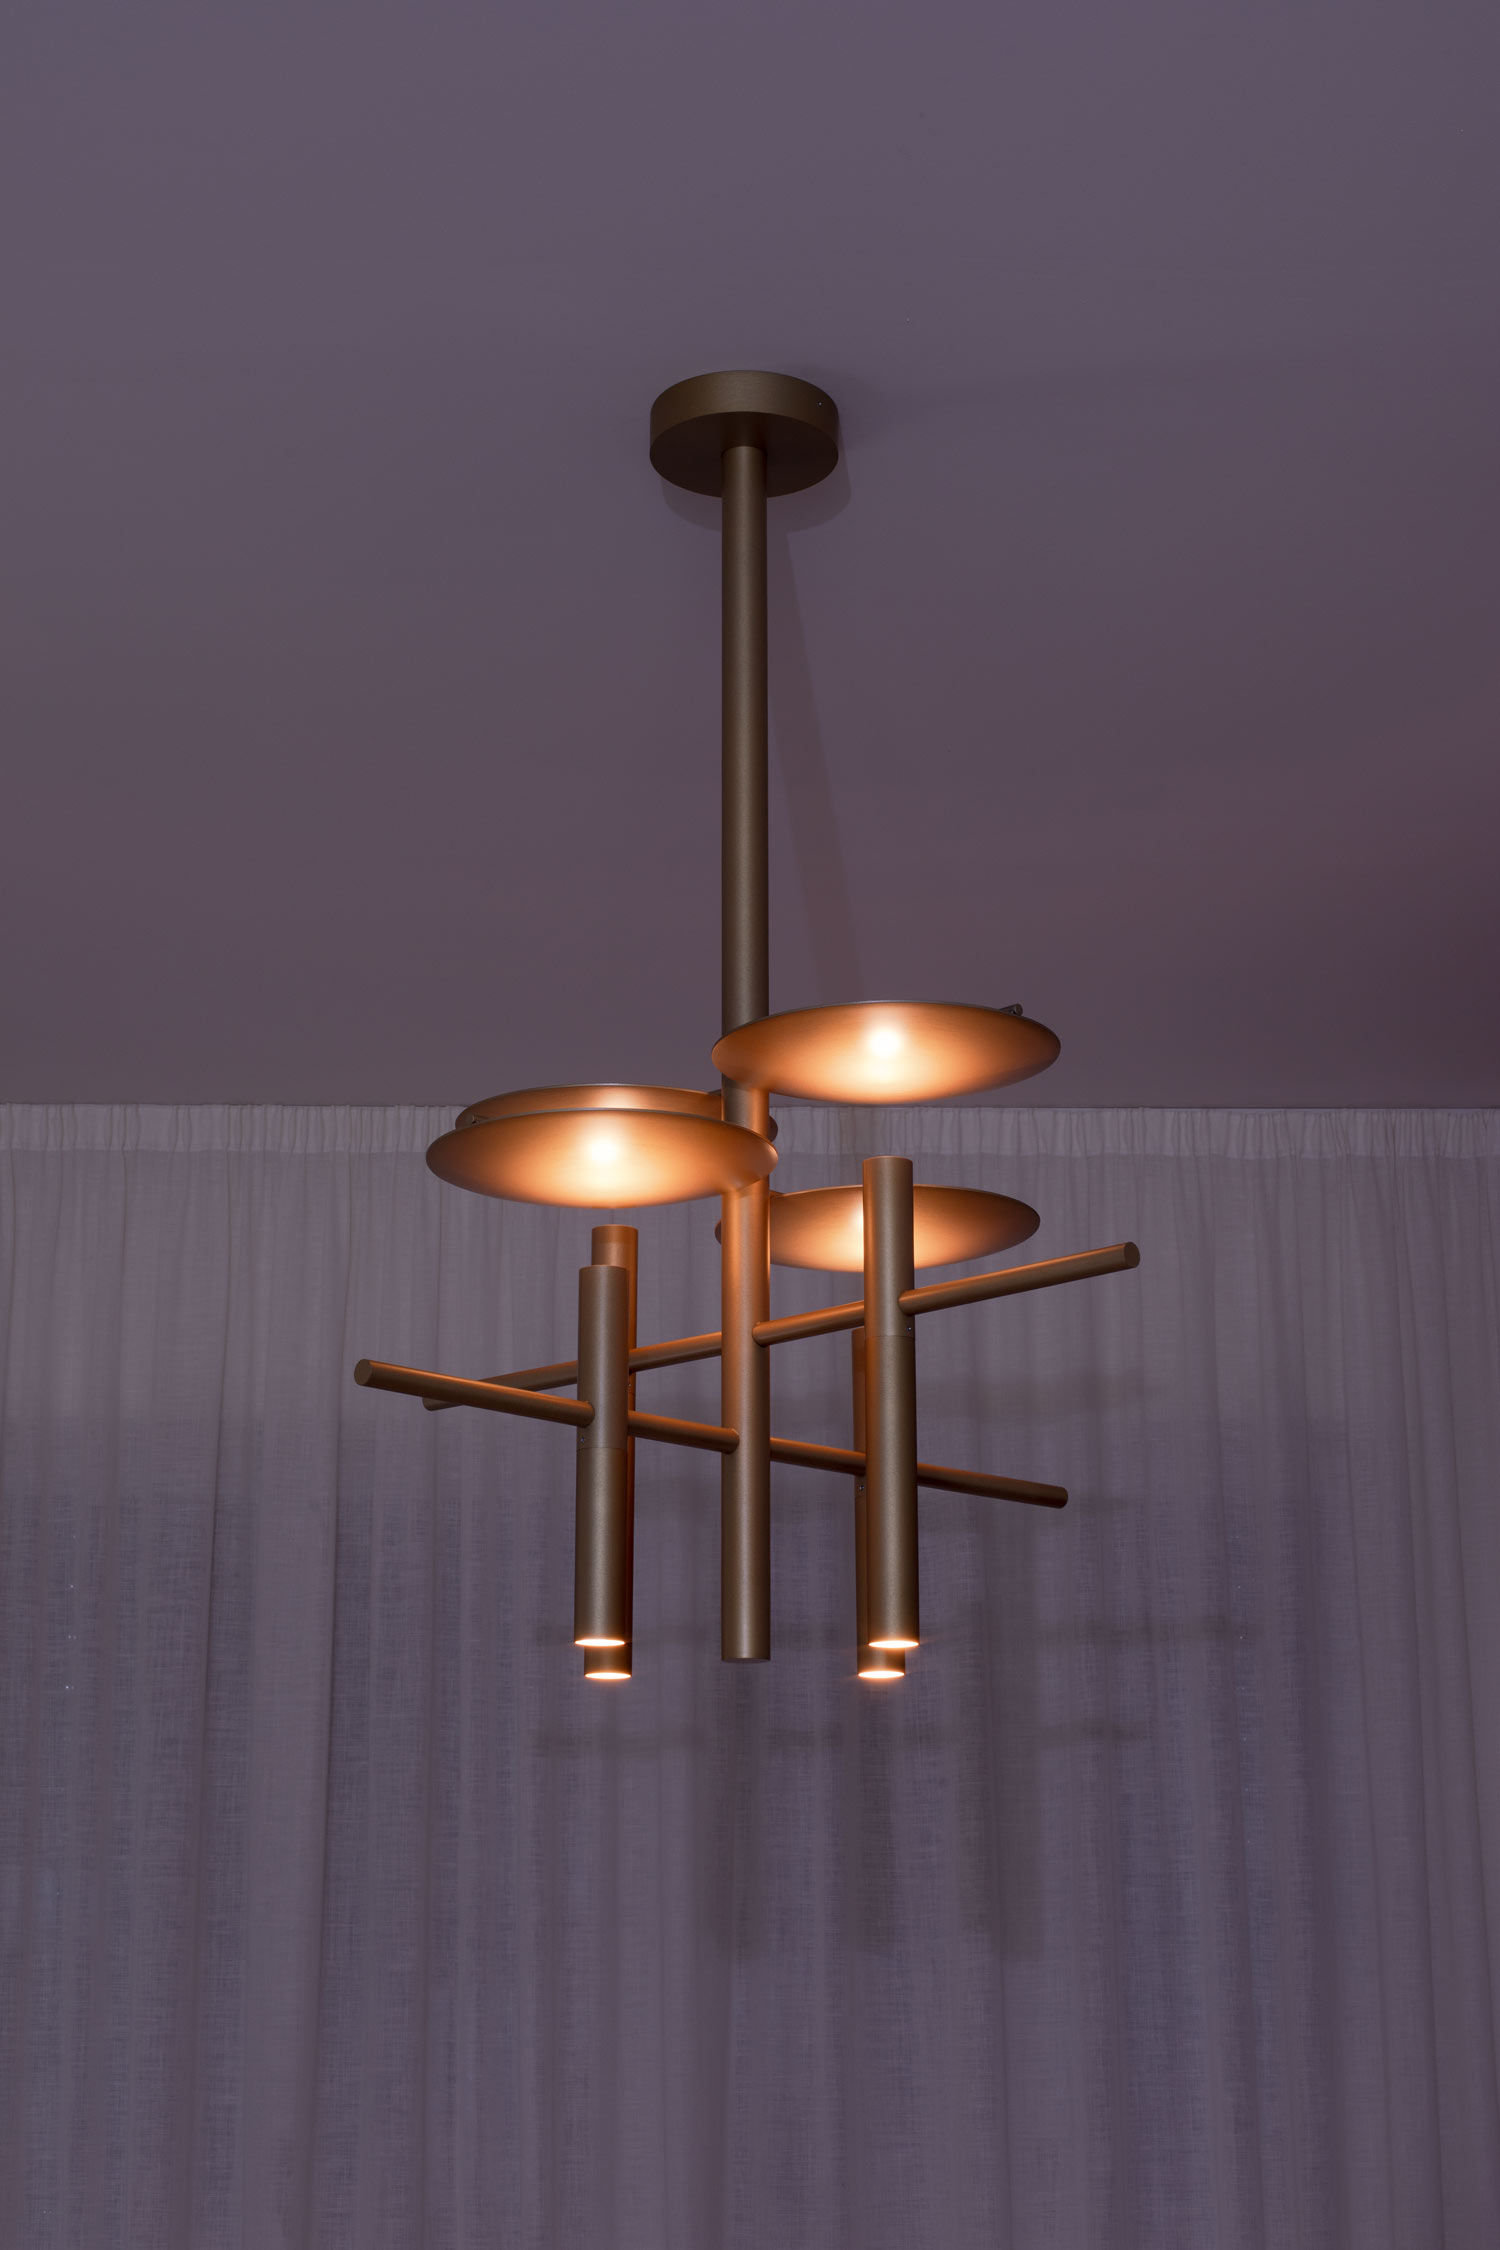 Lunae-luminaire-stainless-steel-brass-vertical-luminaire-designed-by-jiri-krejcirik-atmosphere